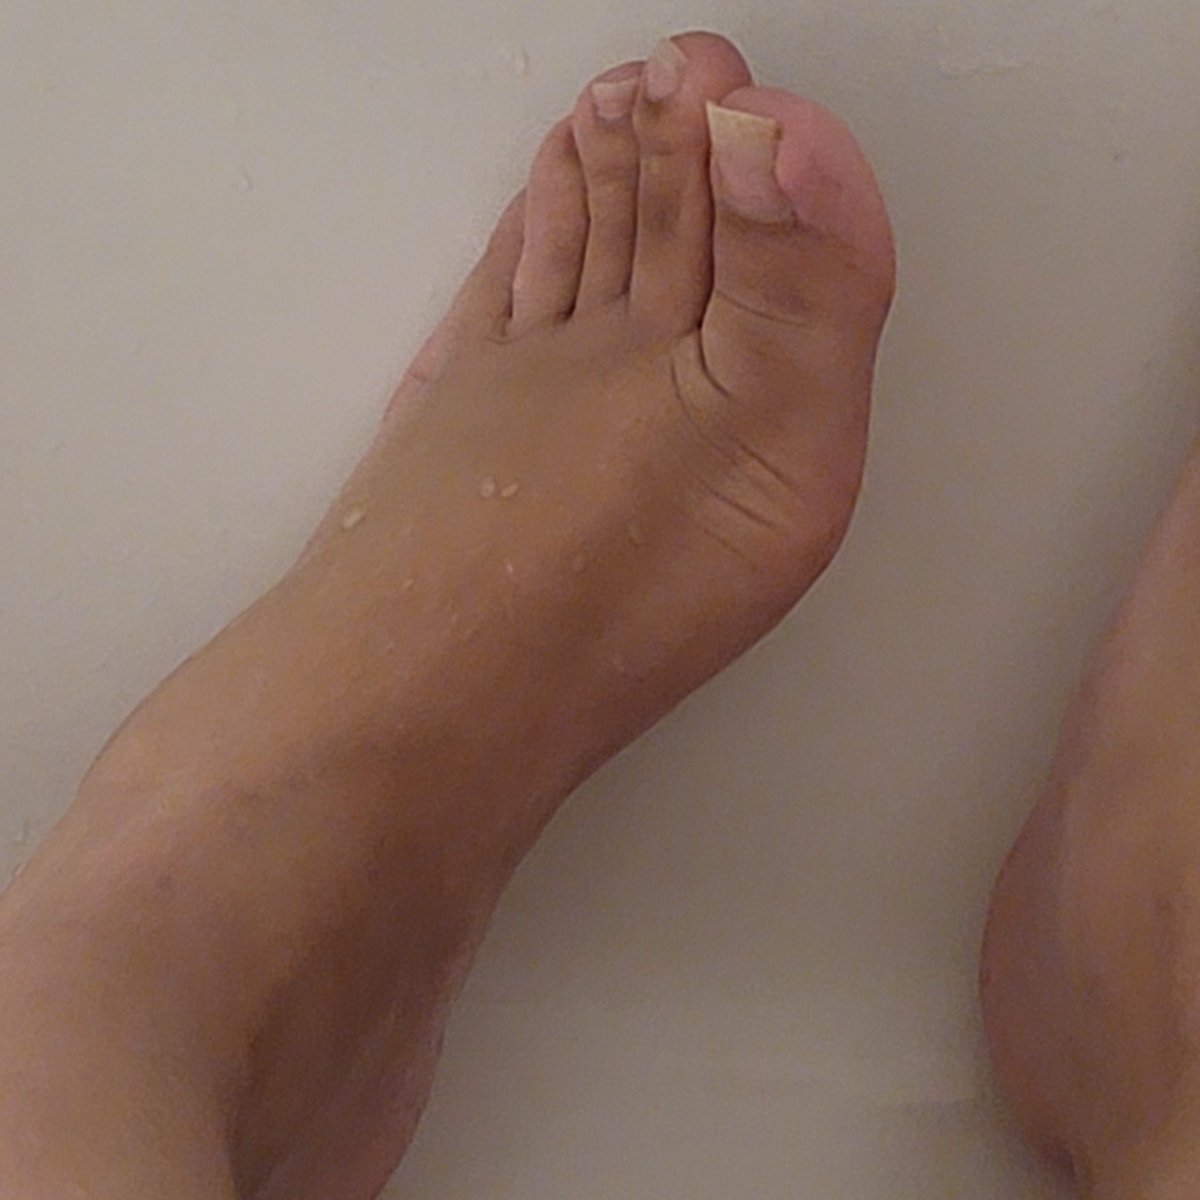 Bathing my feet 😋

#feet 
#feetworshi̇p a